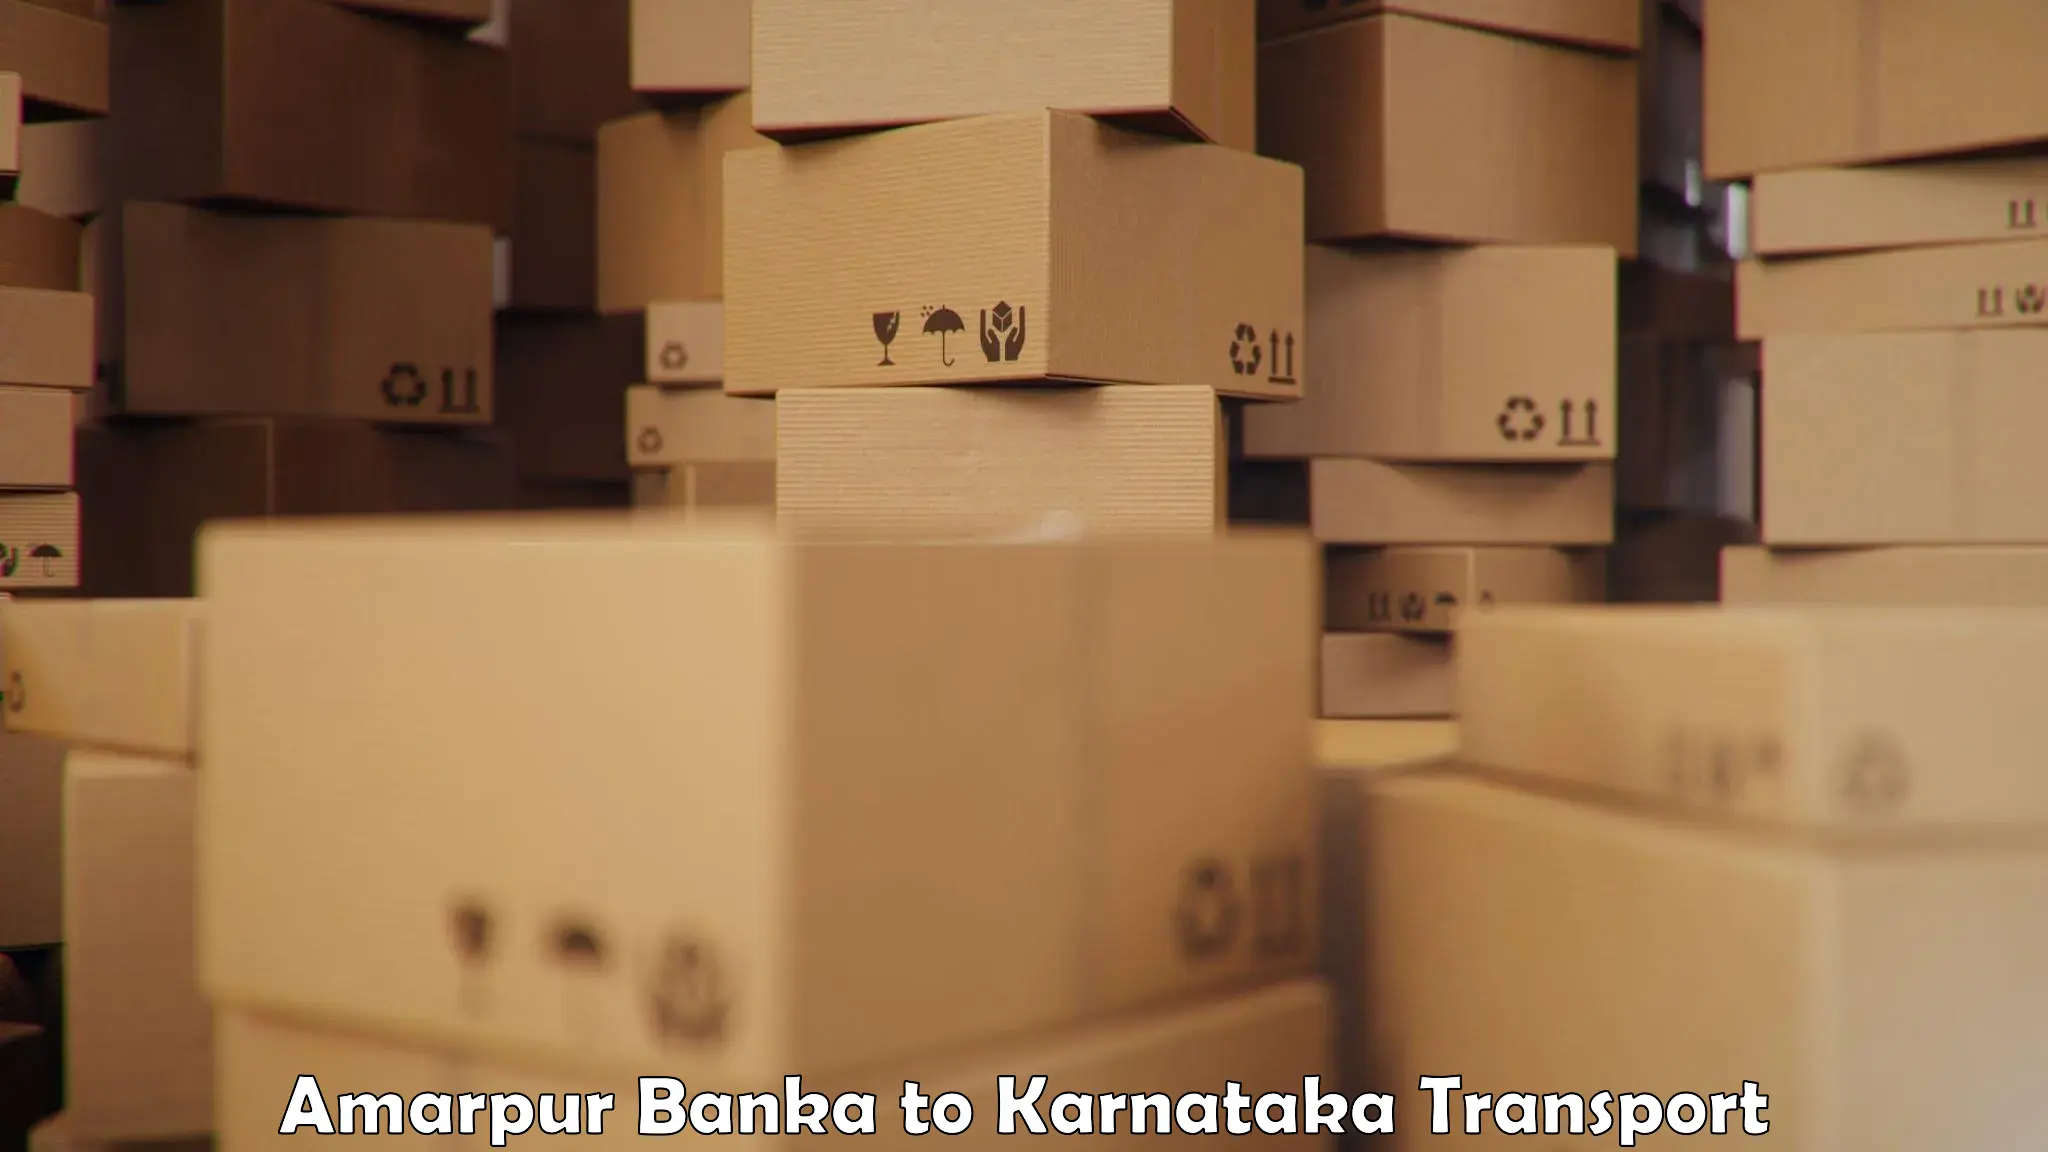 India truck logistics services Amarpur Banka to Bangalore